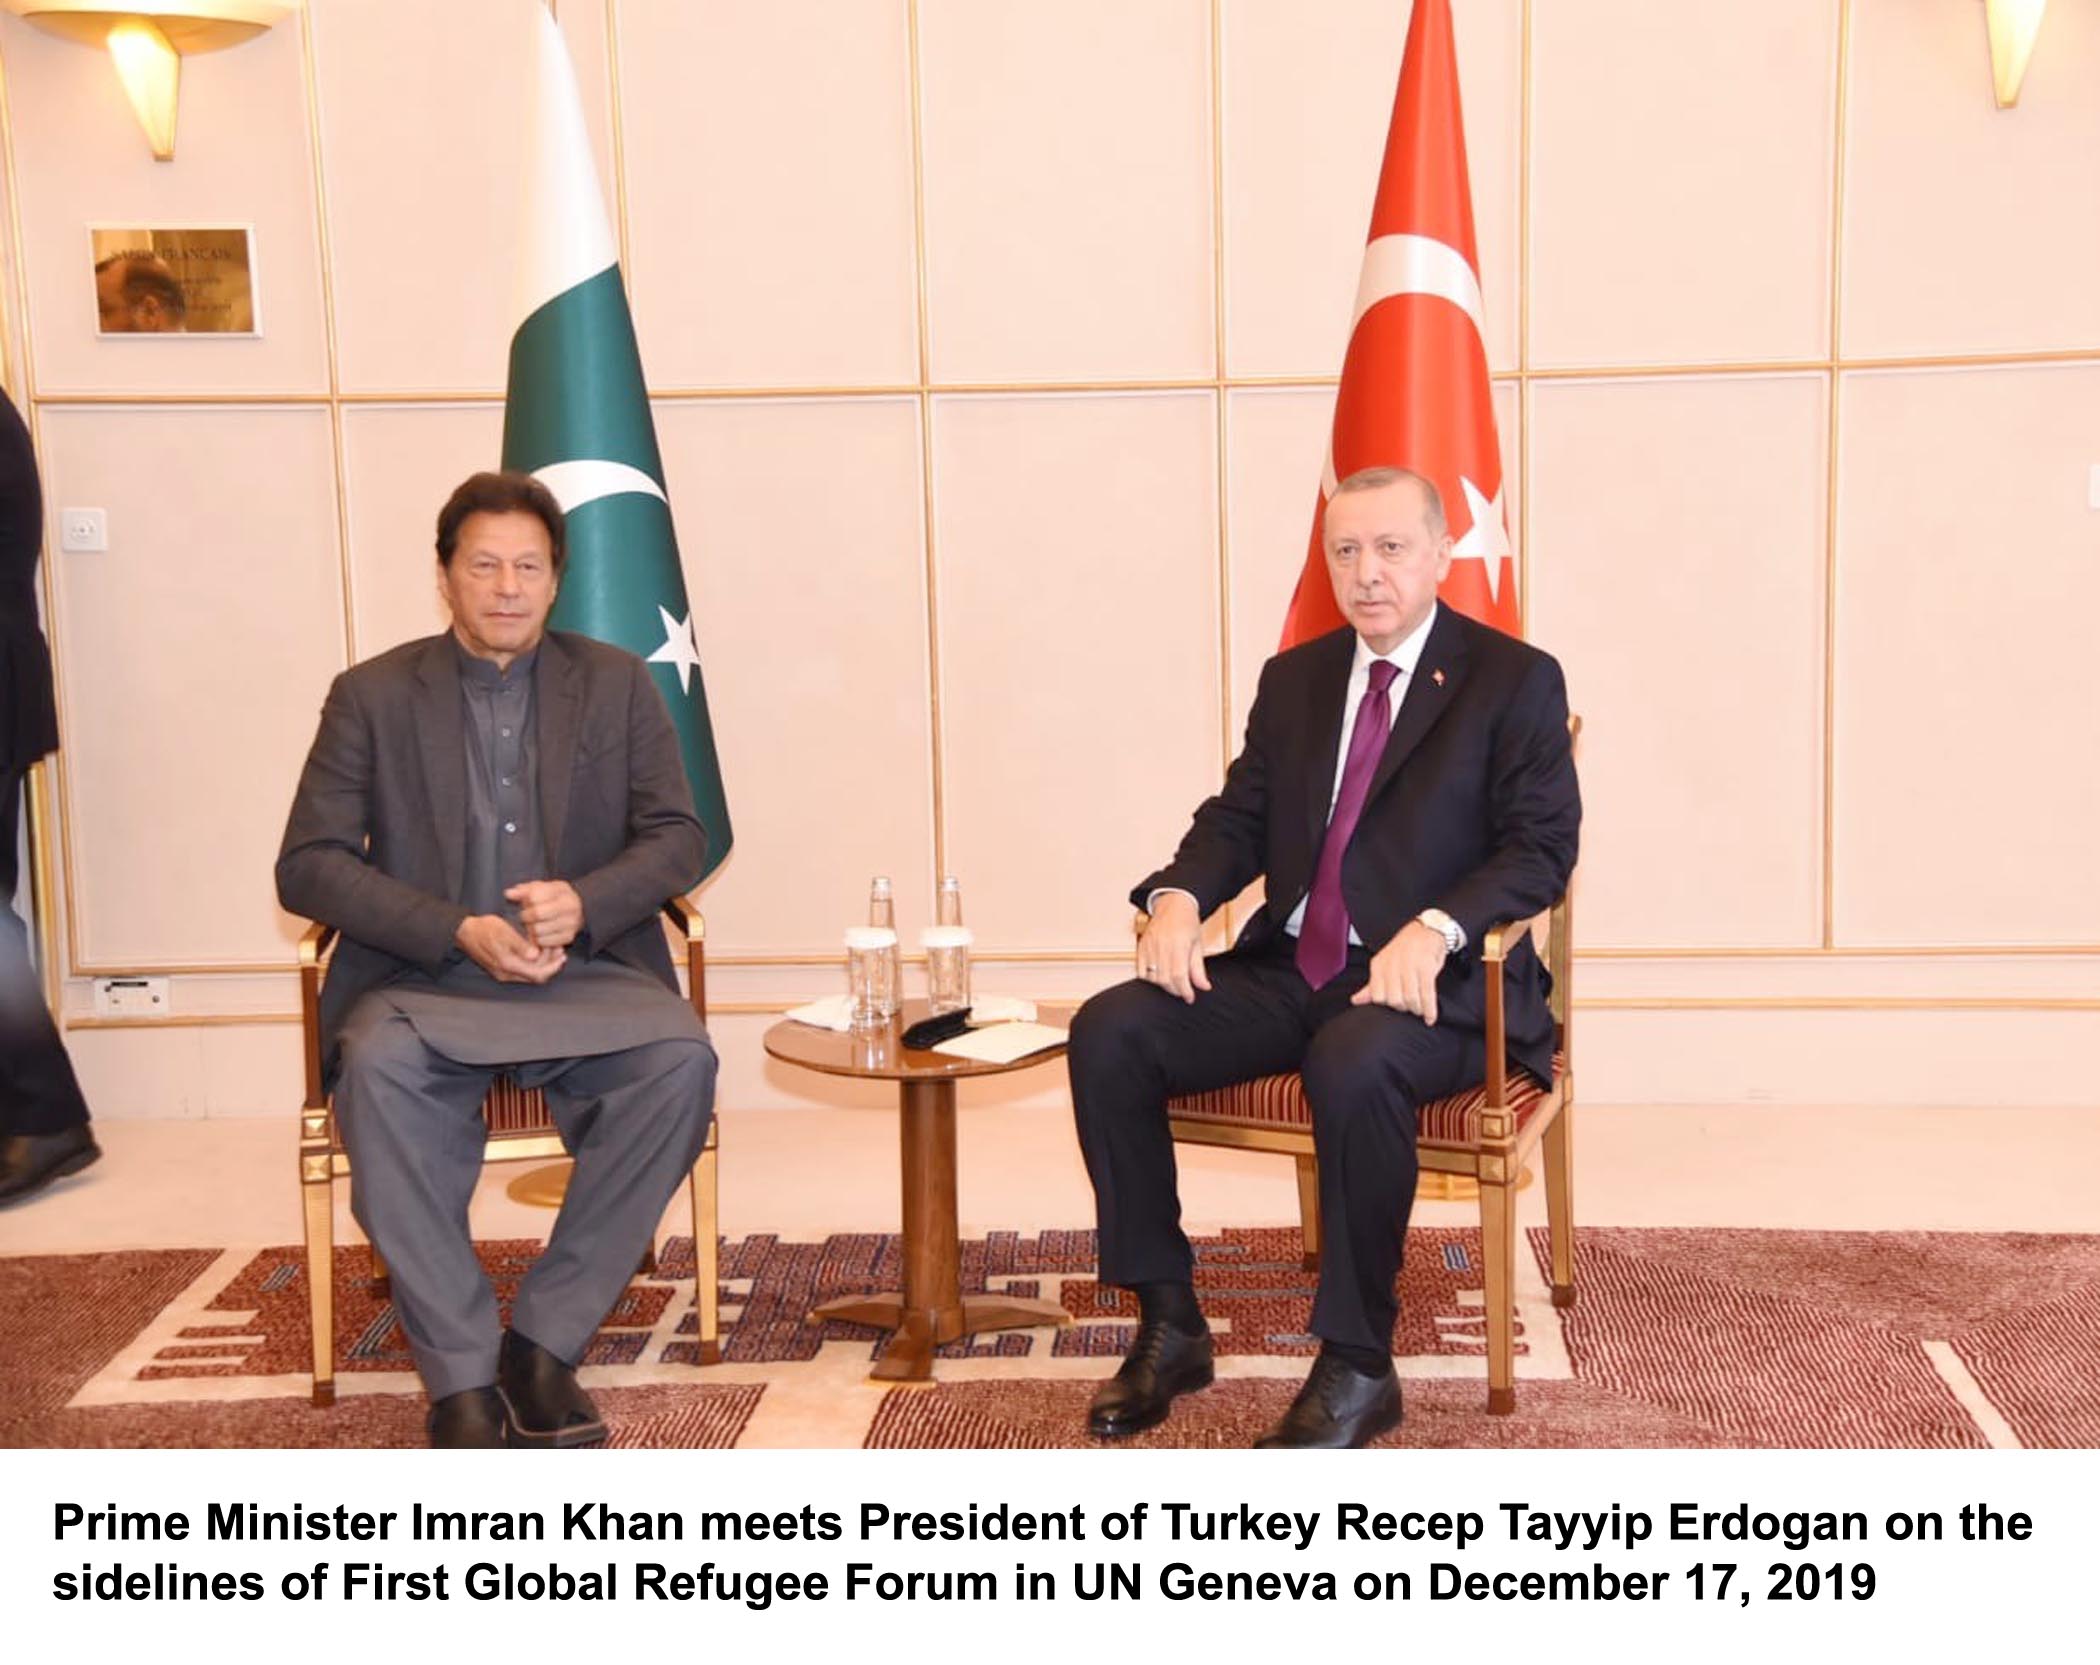 pm imran meets erdogan reaffirms appreciation for support on kashmir